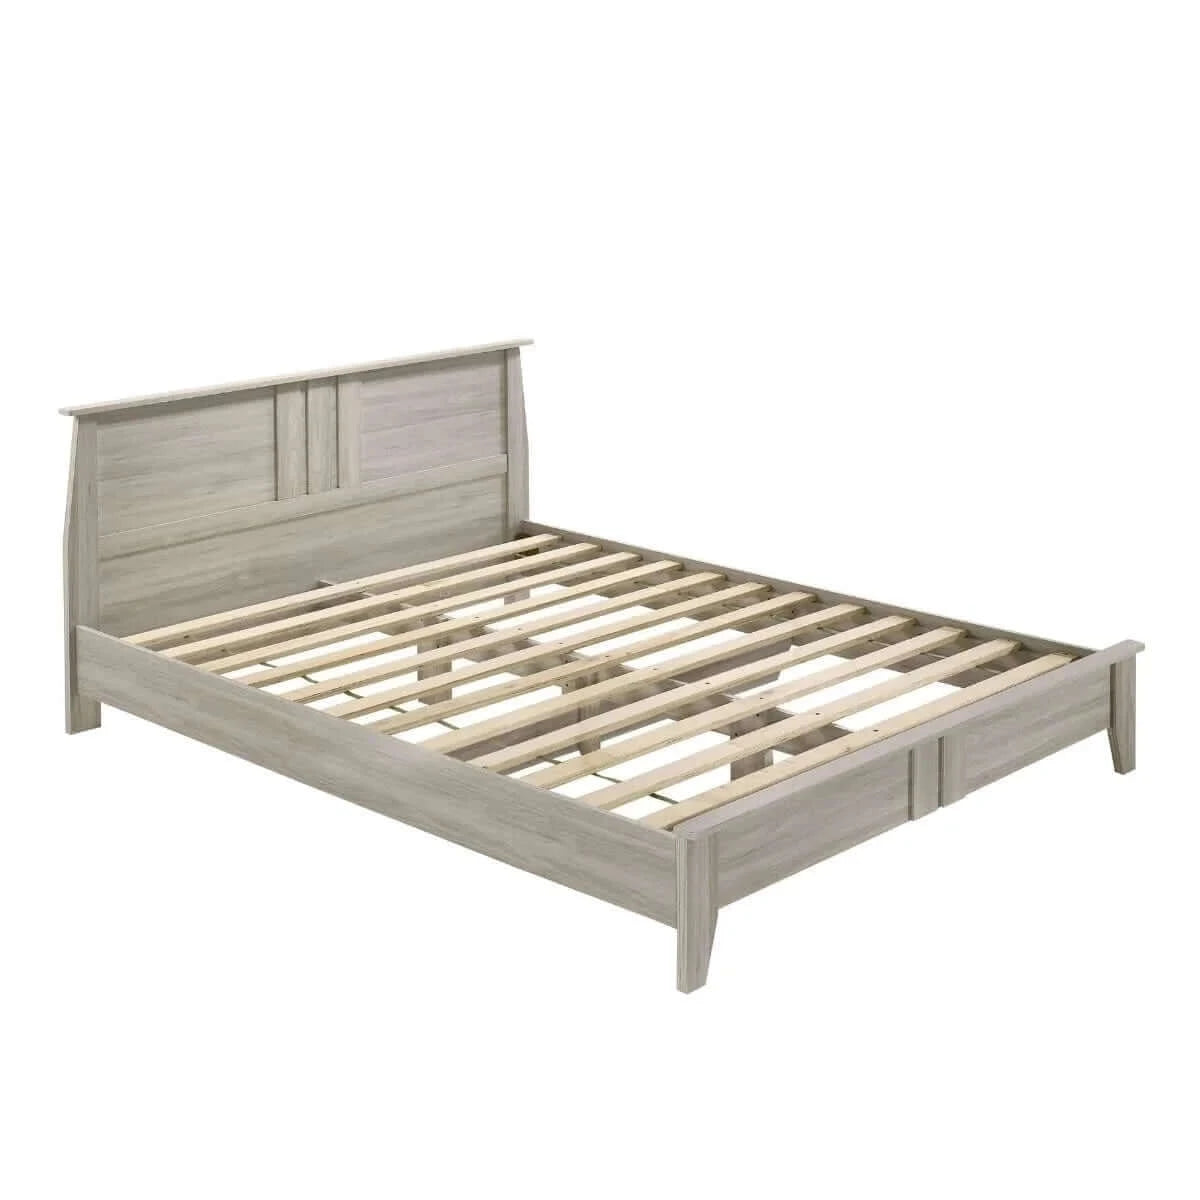 Buy king wooden bed frame base - upinteriors-Upinteriors